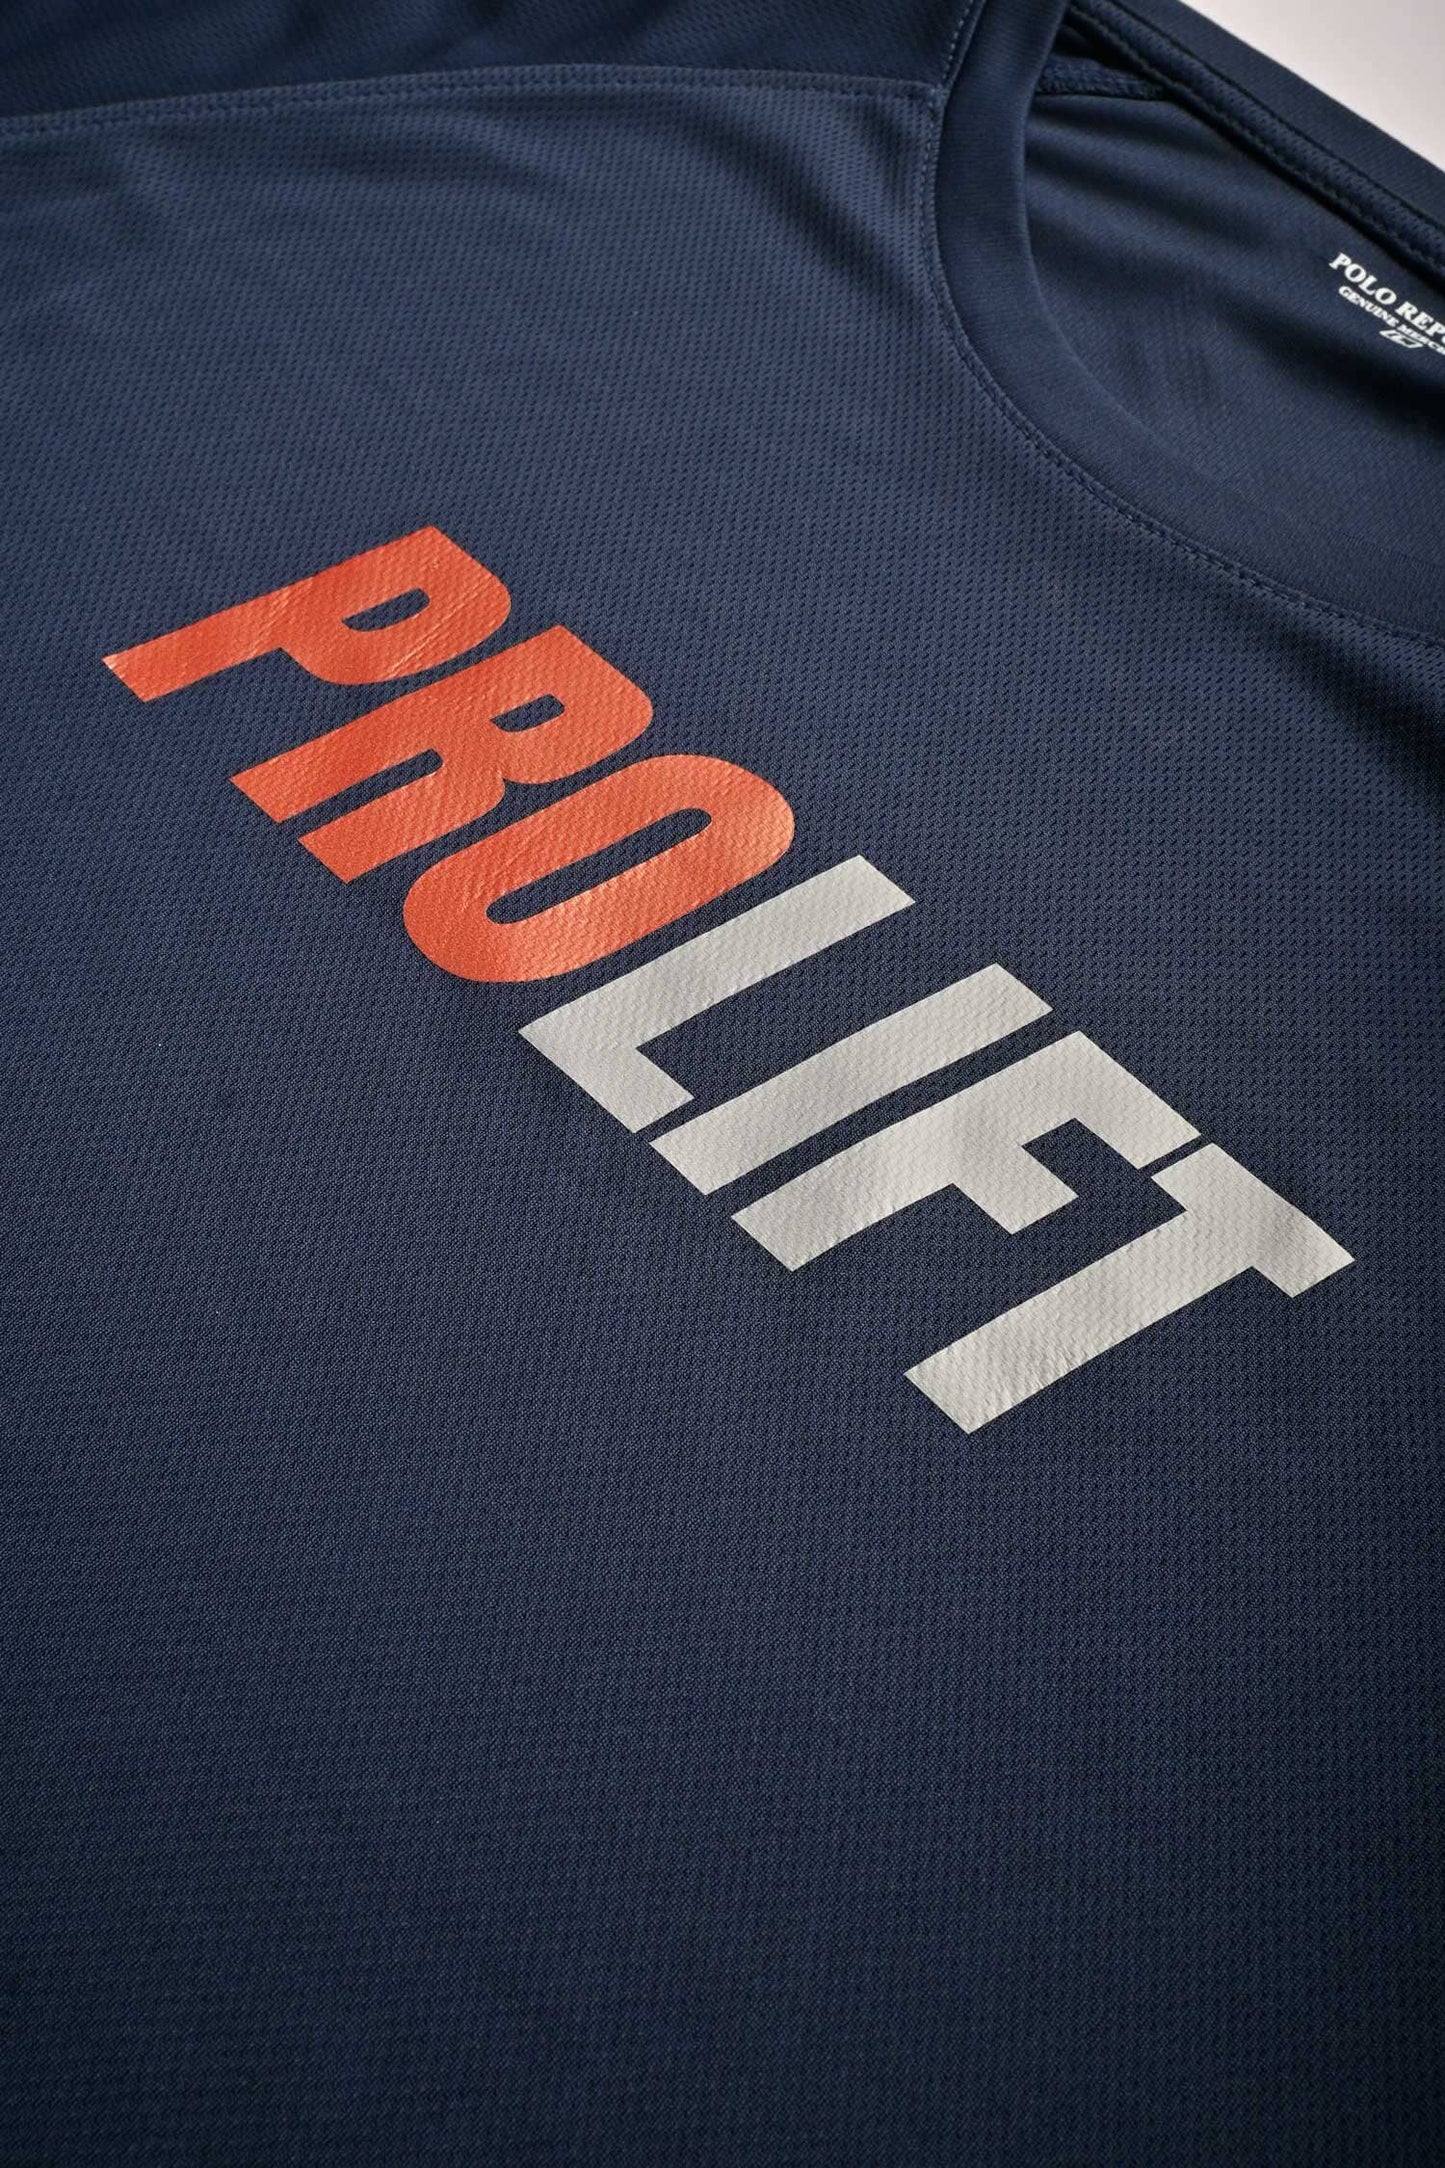 Polo Republica Men's Prolift Printed Activewear Tee Shirt